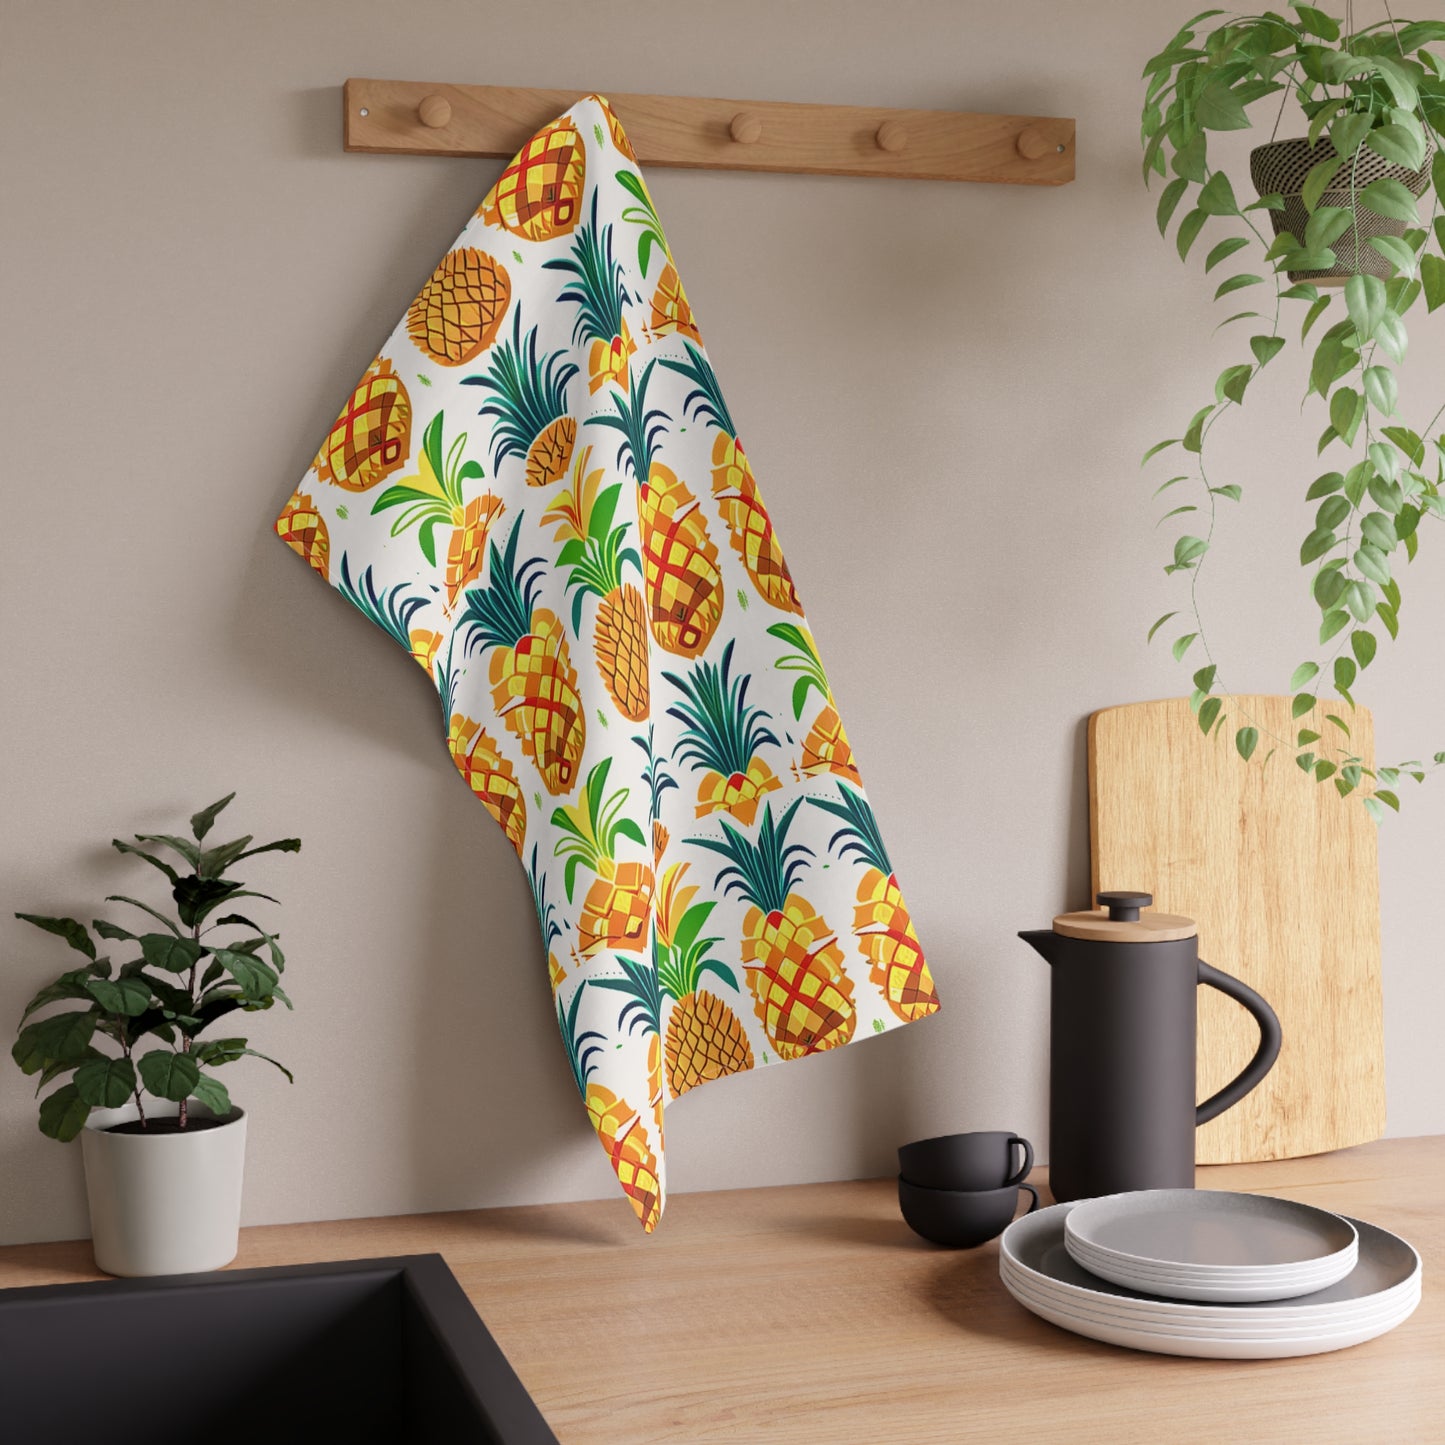 Pina Colada Tropical Pineapple Tiki Lounge Midcentury Modern Pattern Decorative Kitchen Tea Towel/Bar Towel